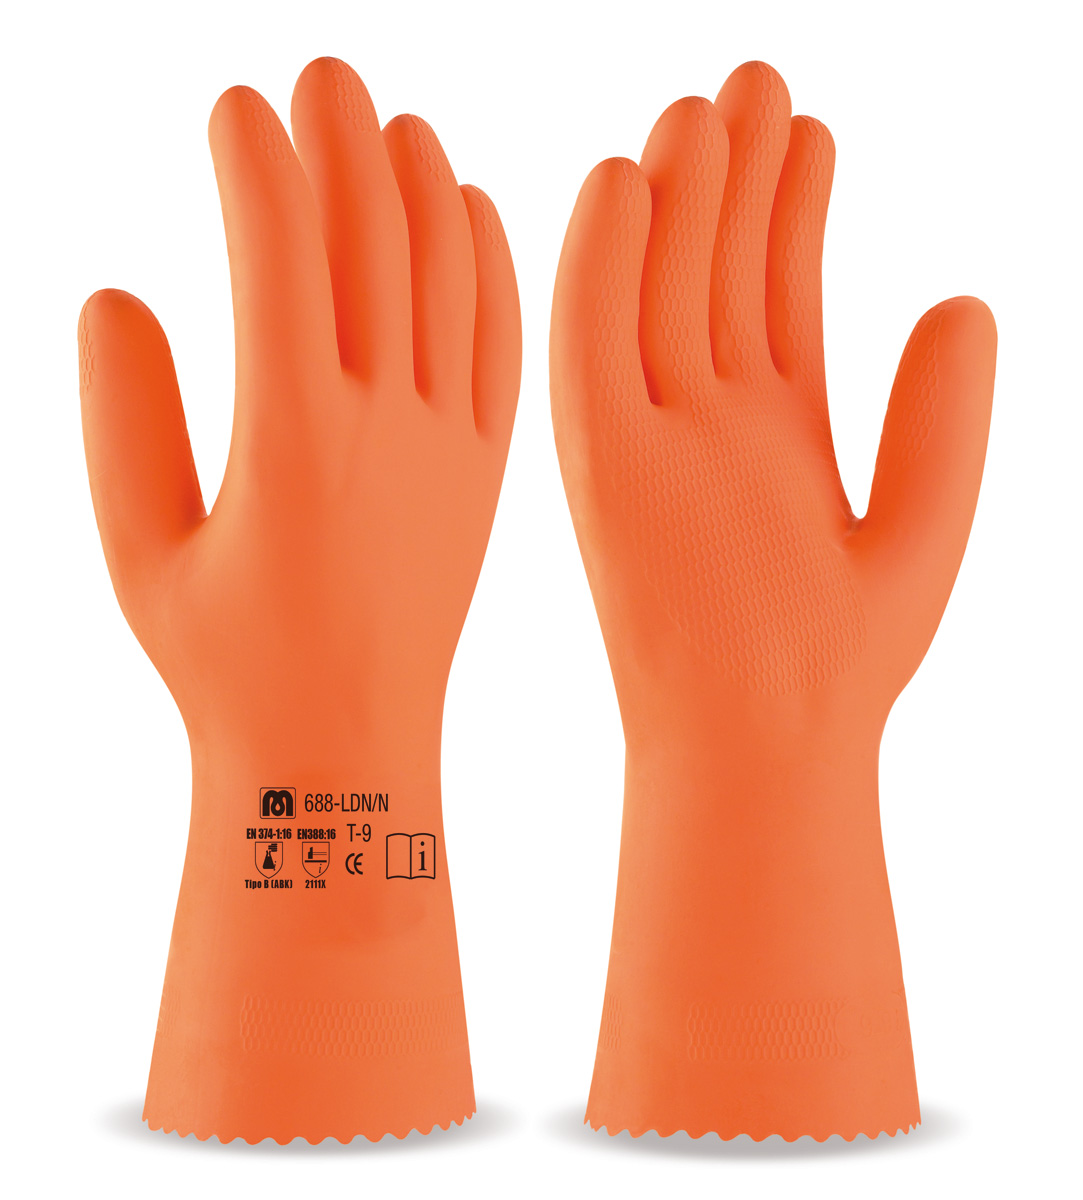 688-LDN/N Luvas de Trabalho Látex sem suporte Luva tipo industrial de látex de cor laranja para riscos mecânicos, químicos e microrganismos.